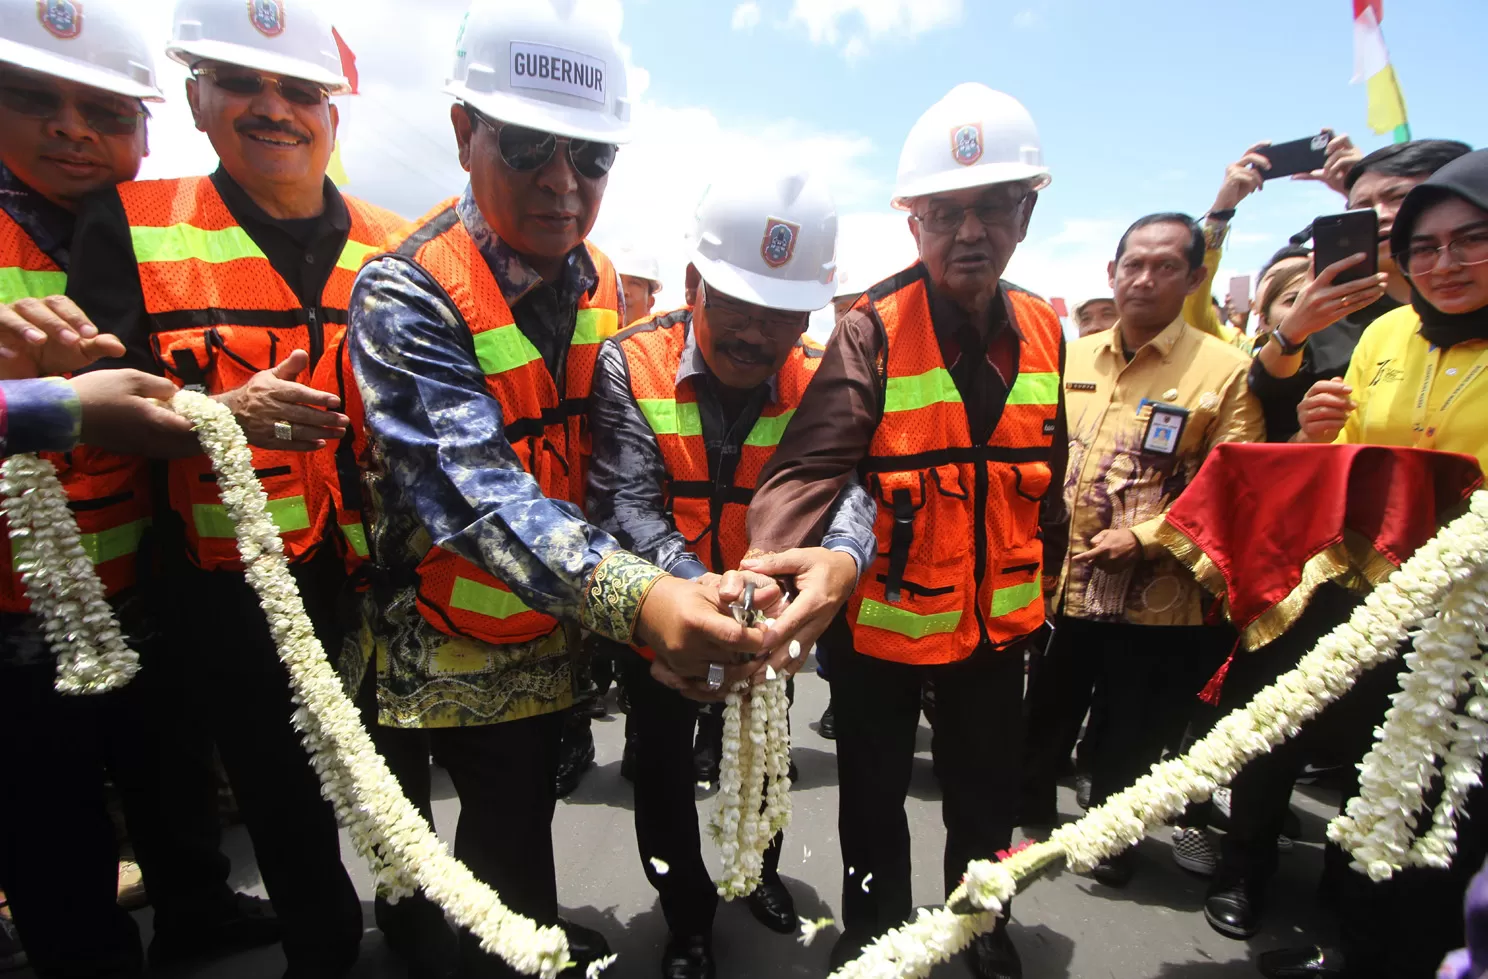 RAMAH INVESTASI: Gubernur Kalsel Sahbirin Noor saat peresmian infrastruktur di Kabupaten Banjar, beberapa waktu lalu.